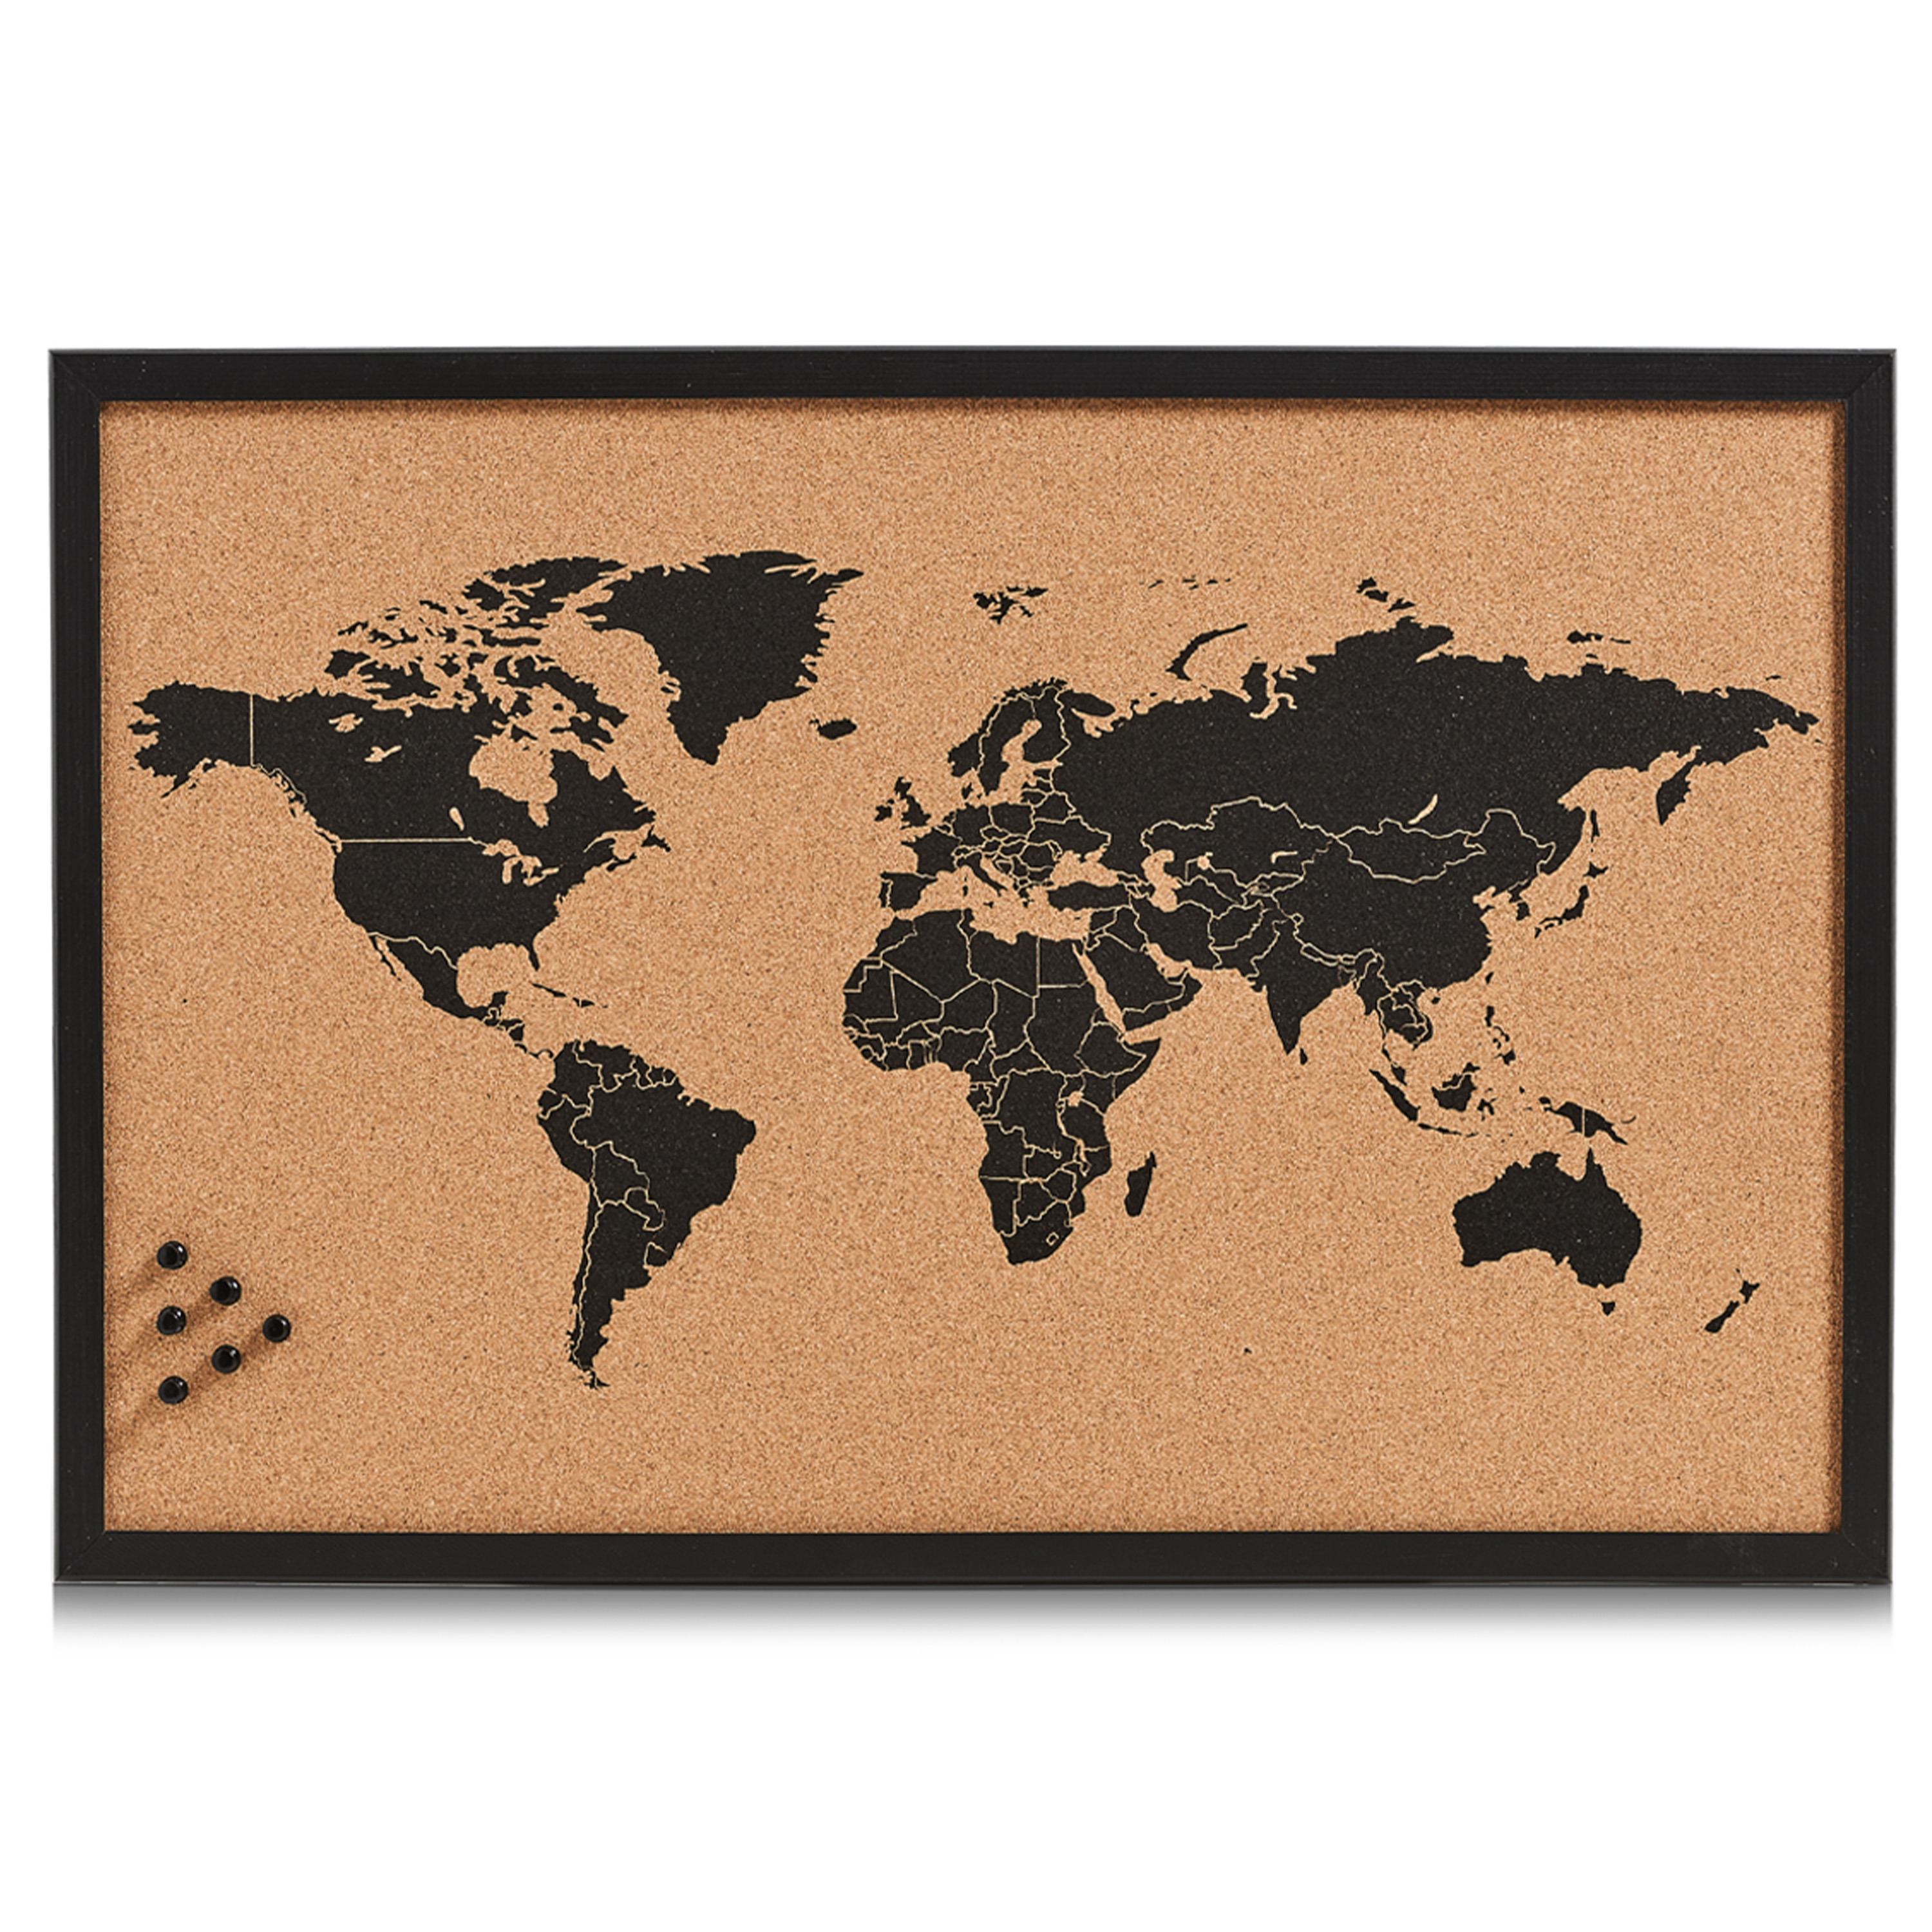 Zeller prikbord wereldkaart zwart 60 x 40 cm kurk-hout